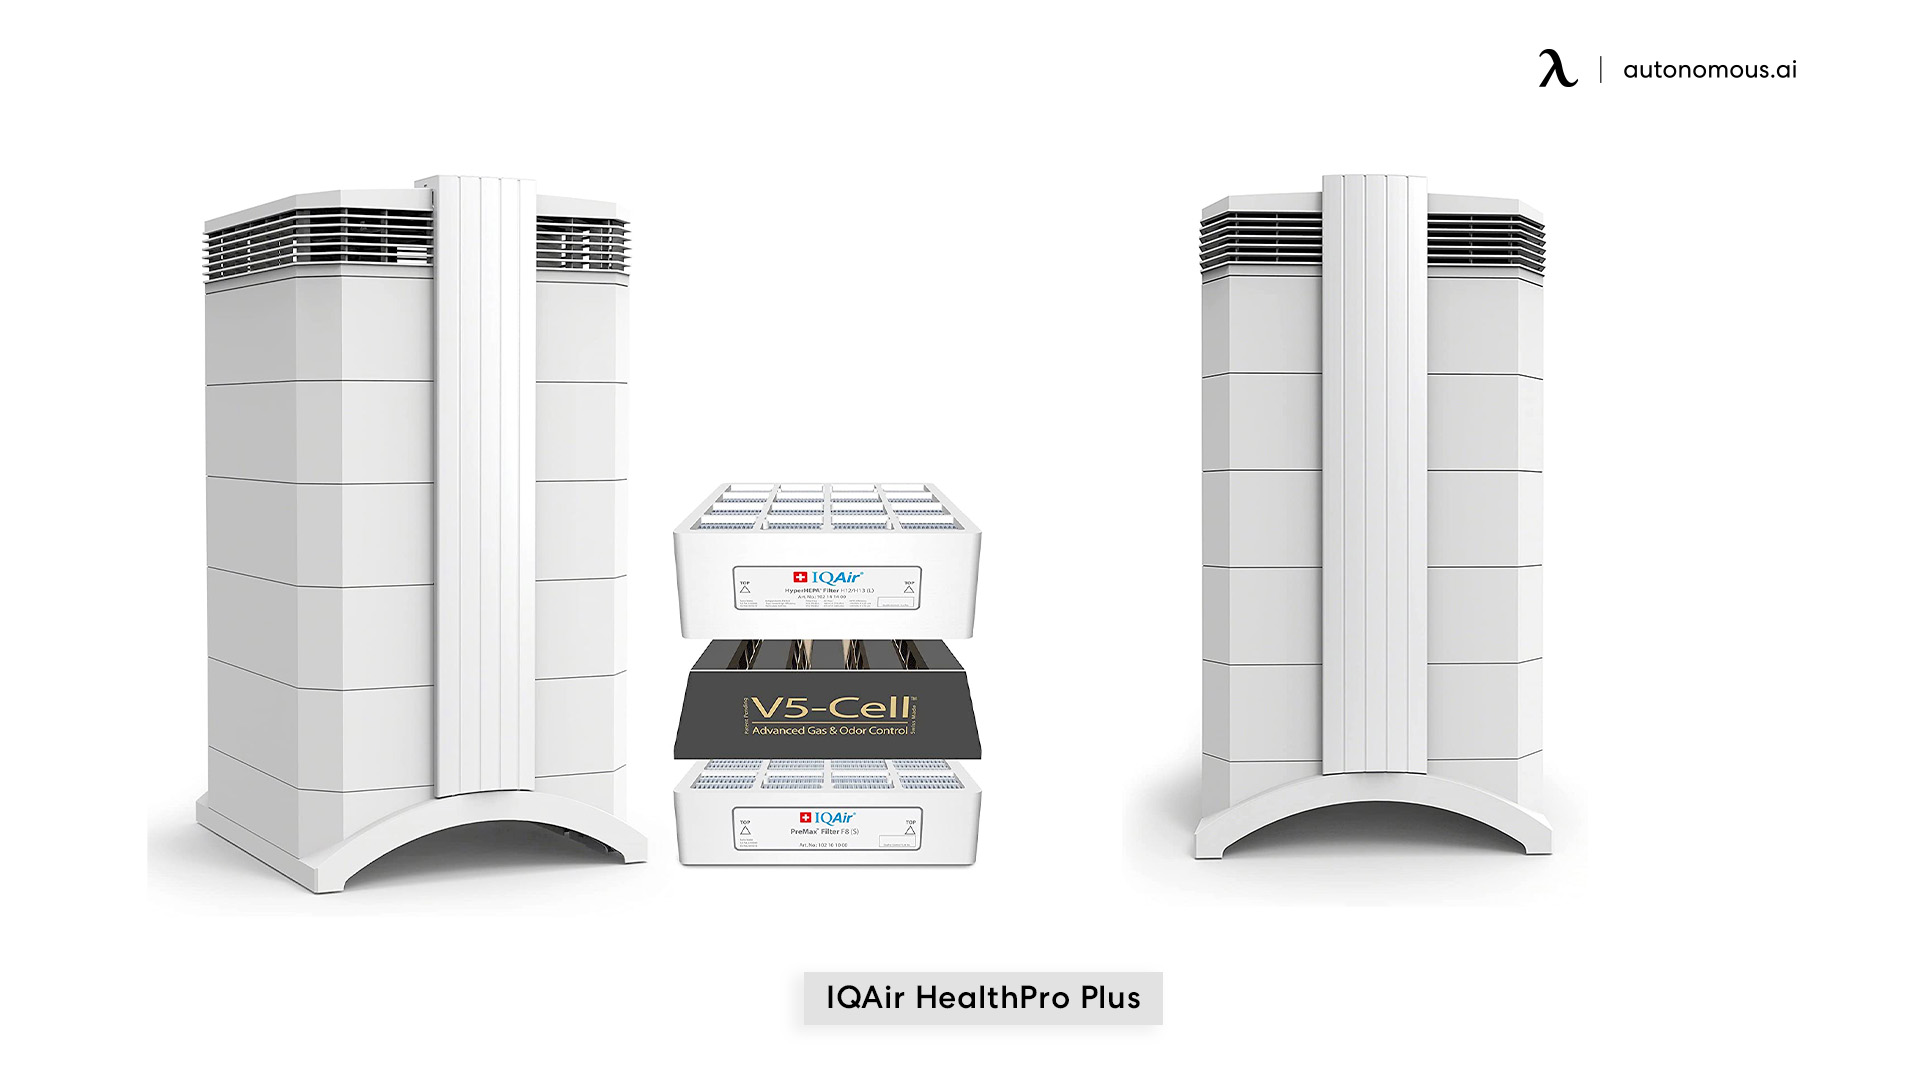 IQAir HealthPro Plus air purifier for office